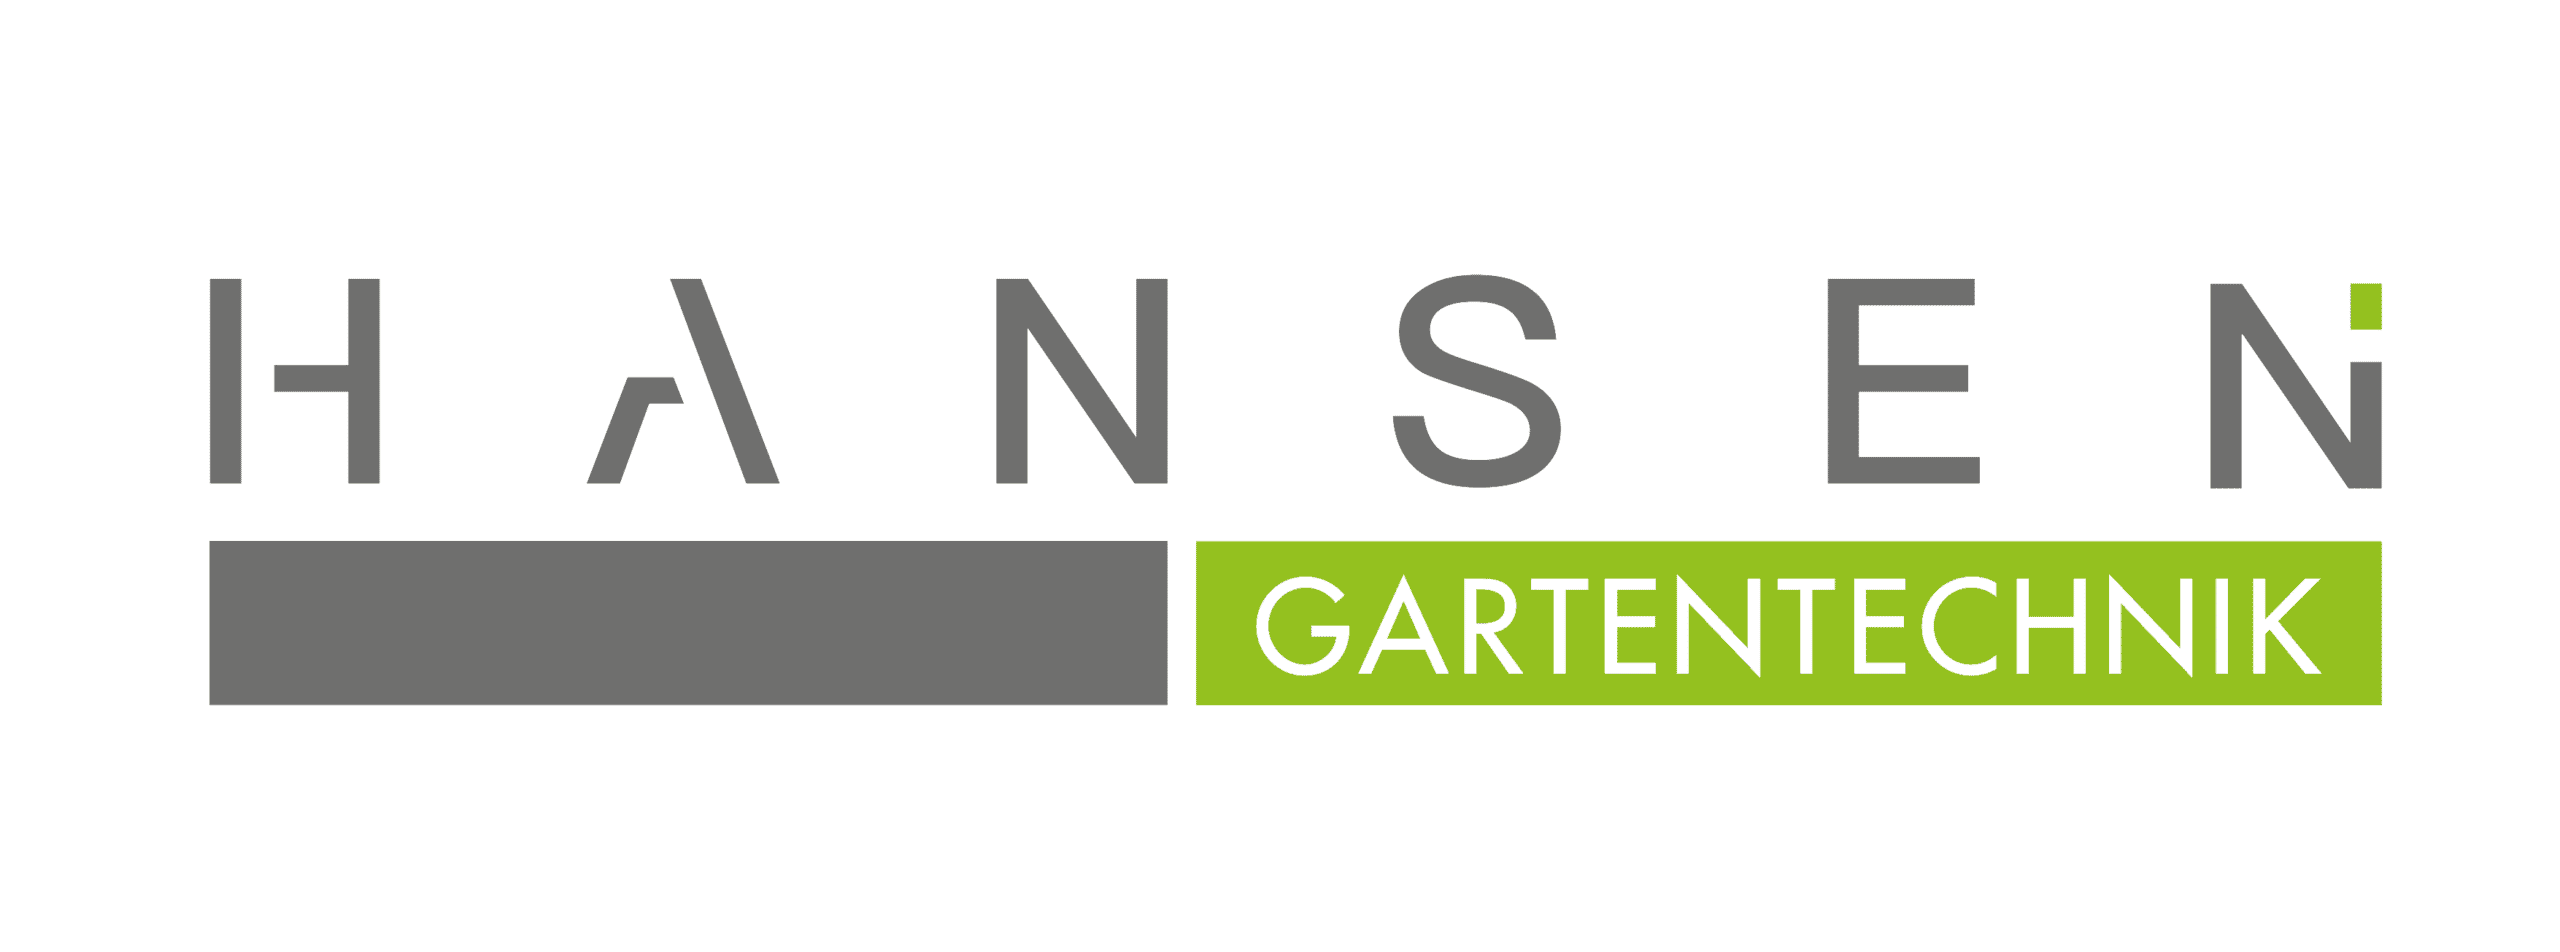 Hansen Gartentechnik